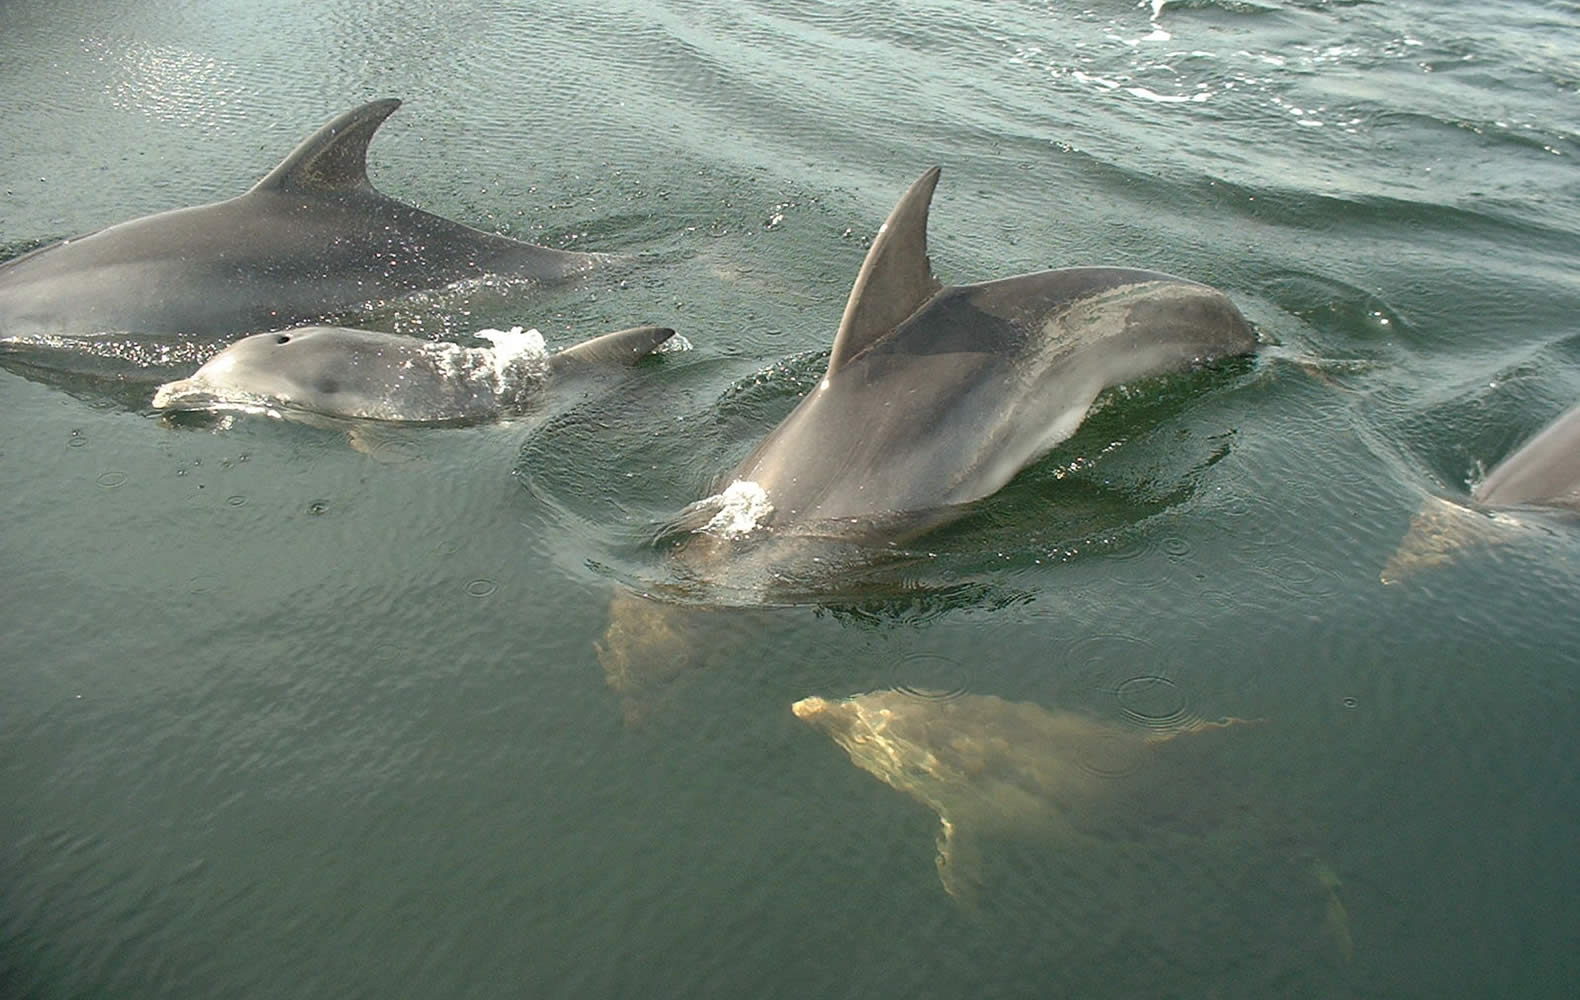 Dolphins at the Hobart docks. Photo: Graeme Paine, DPIPWE.